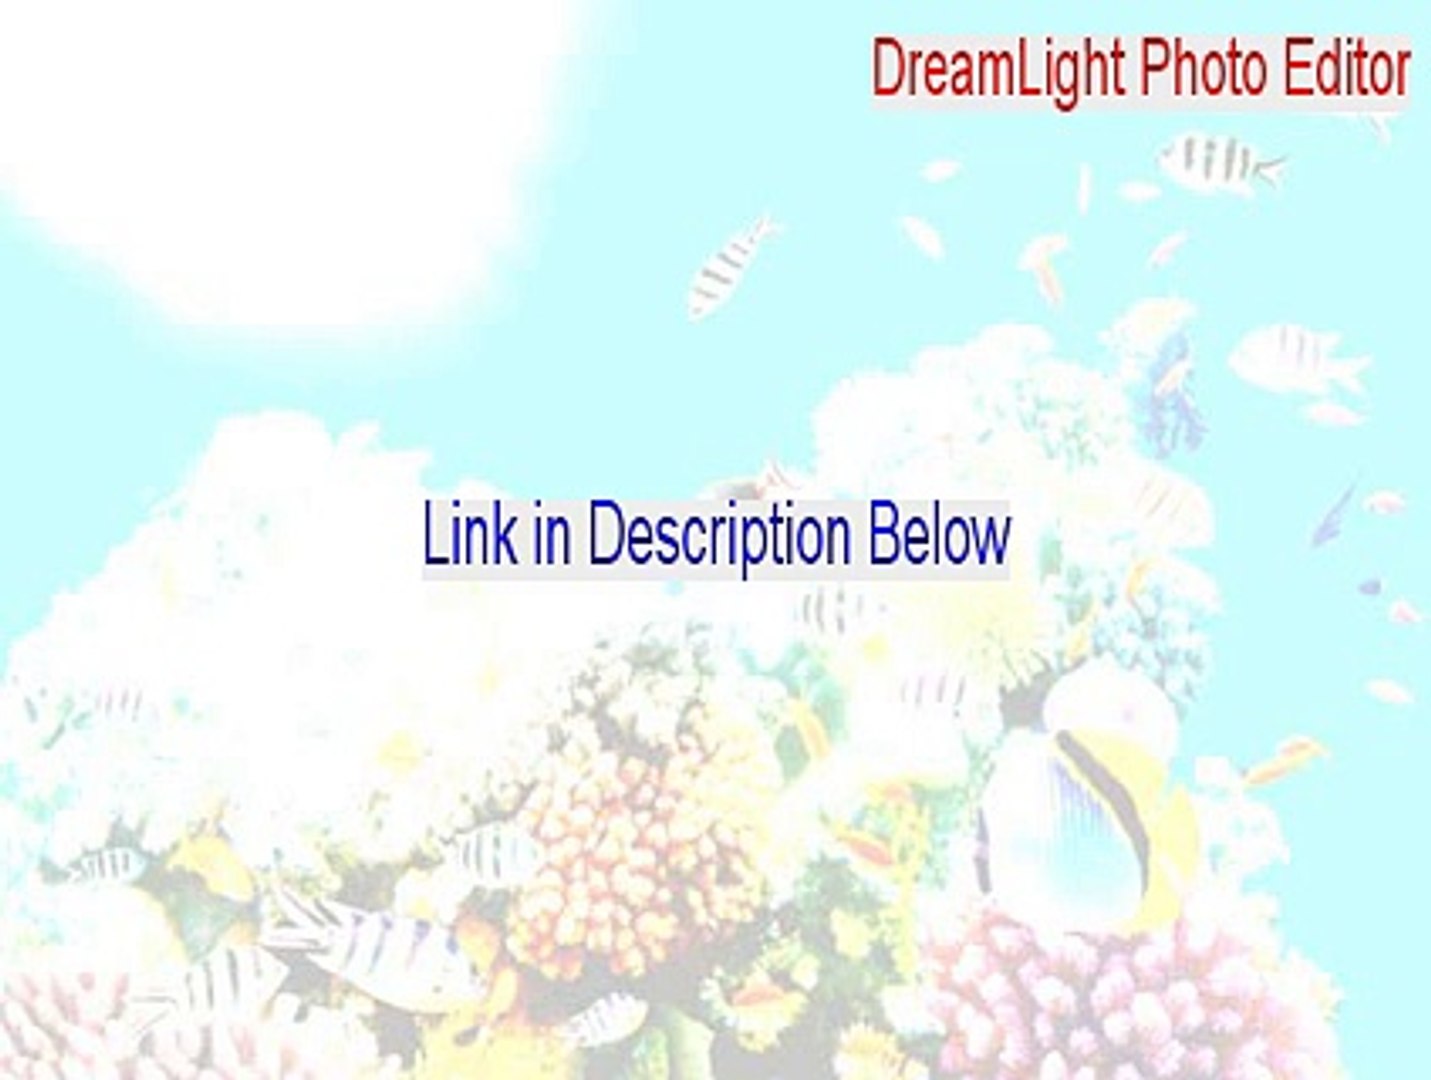 dreamlight photo editor 4.2 serial key